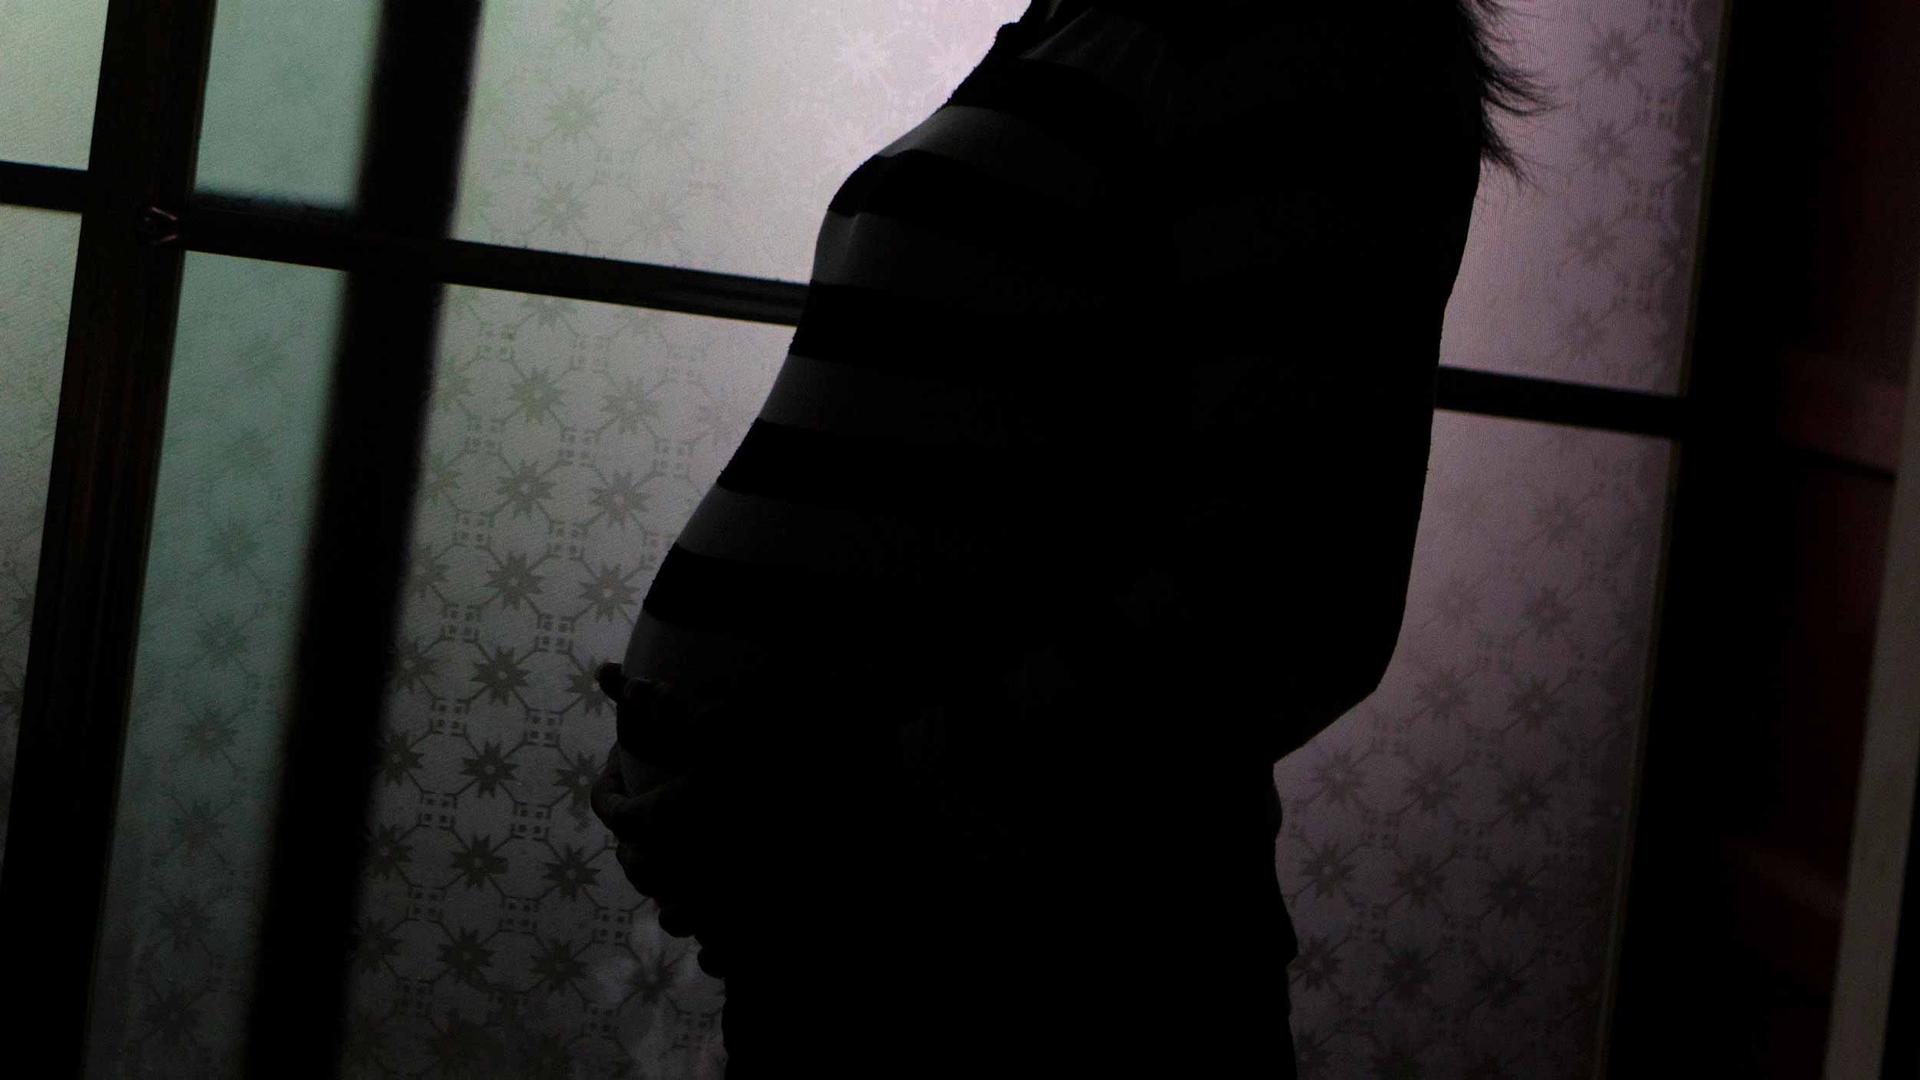 A woman's pregnant silhouette